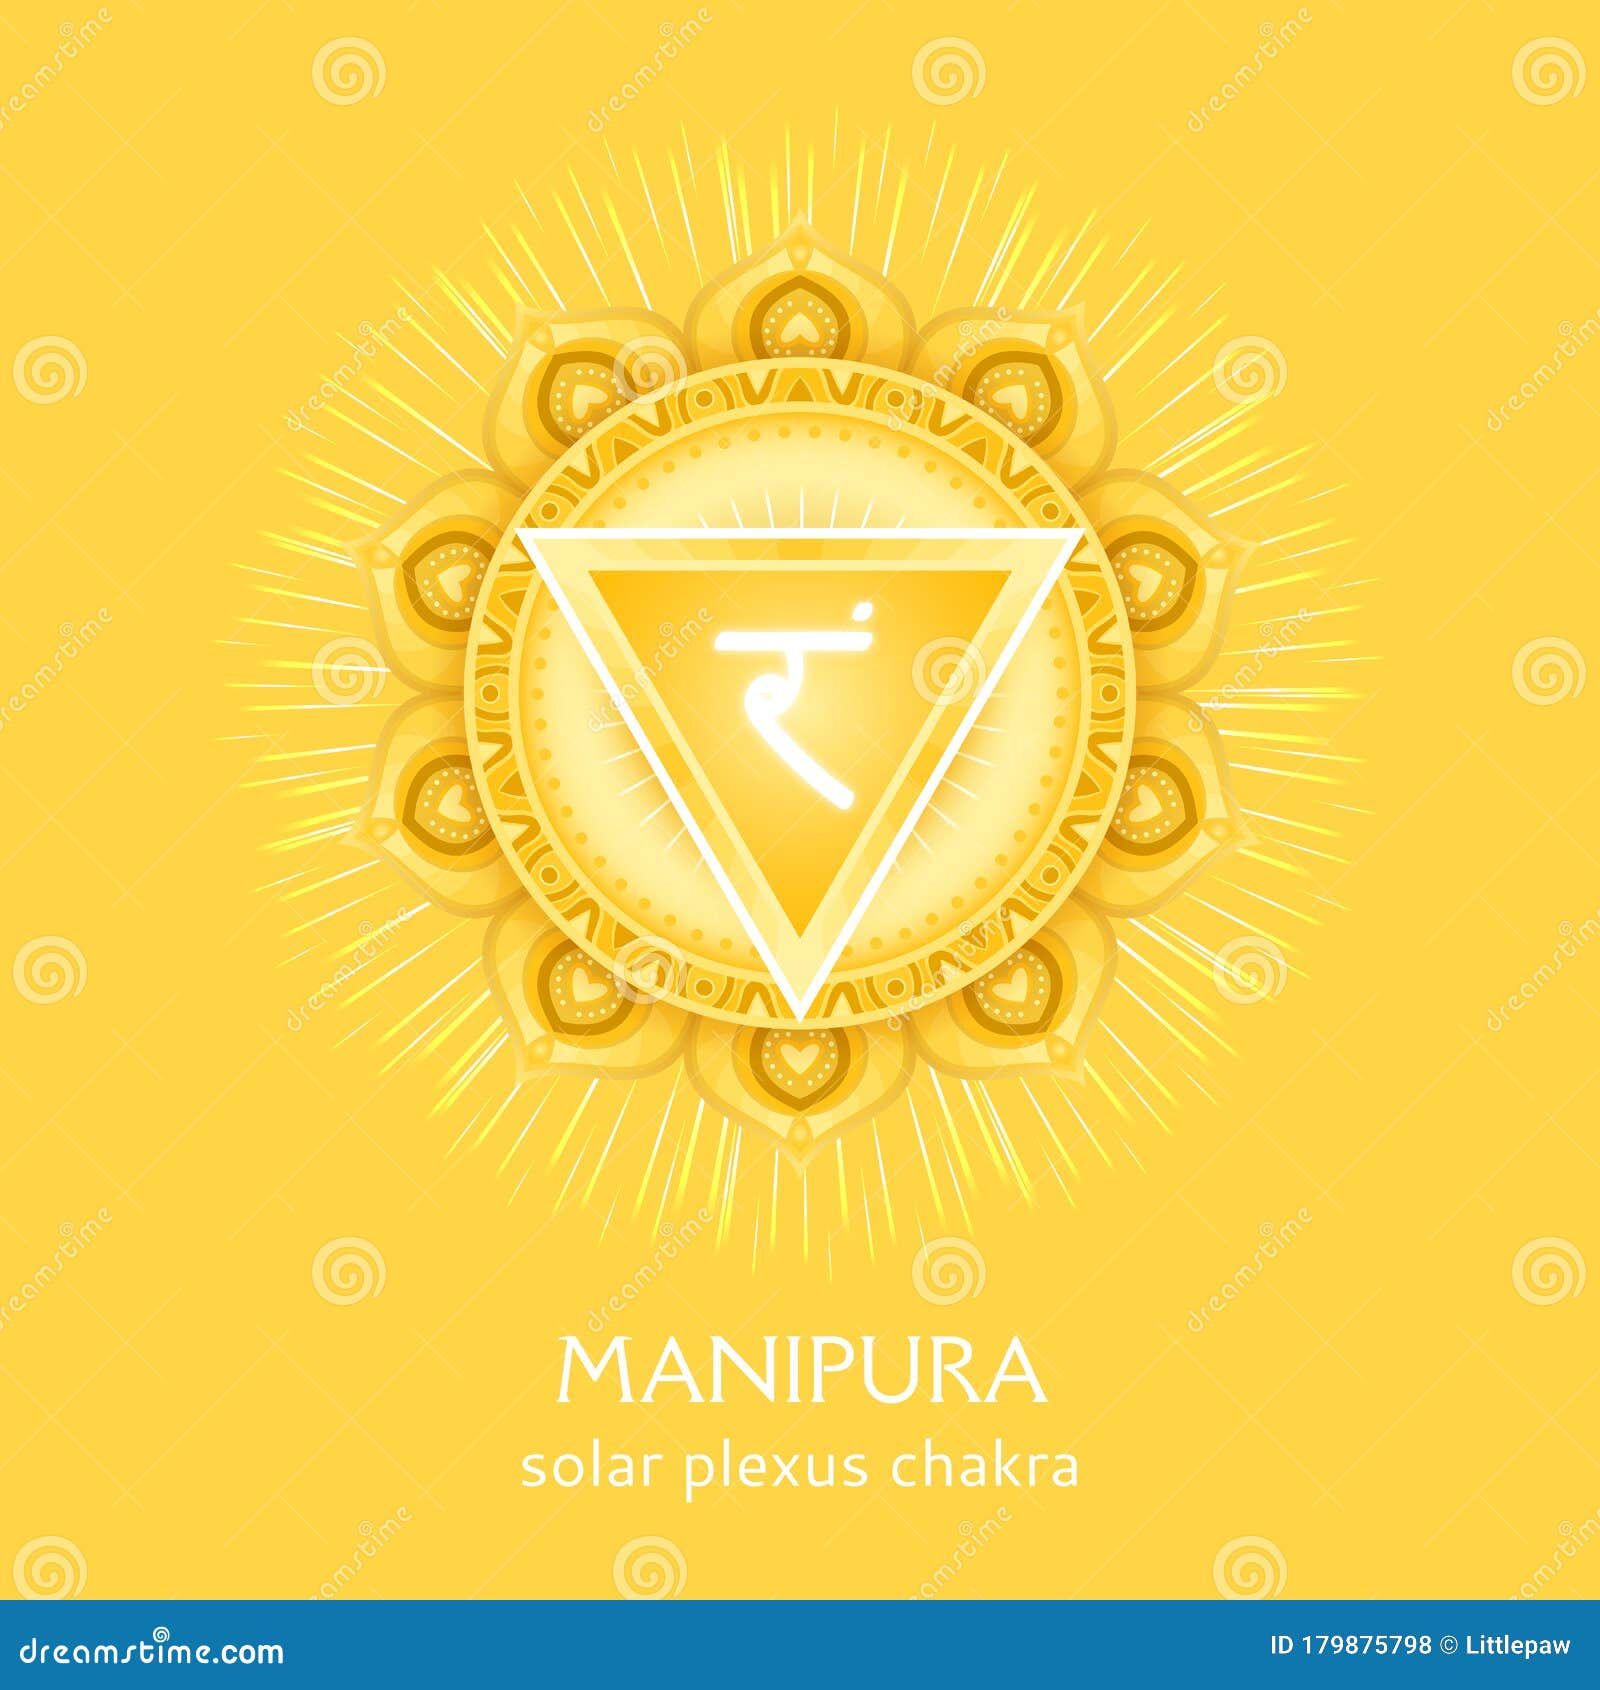 manipura, solar plexus chakra . colorful mandala.  